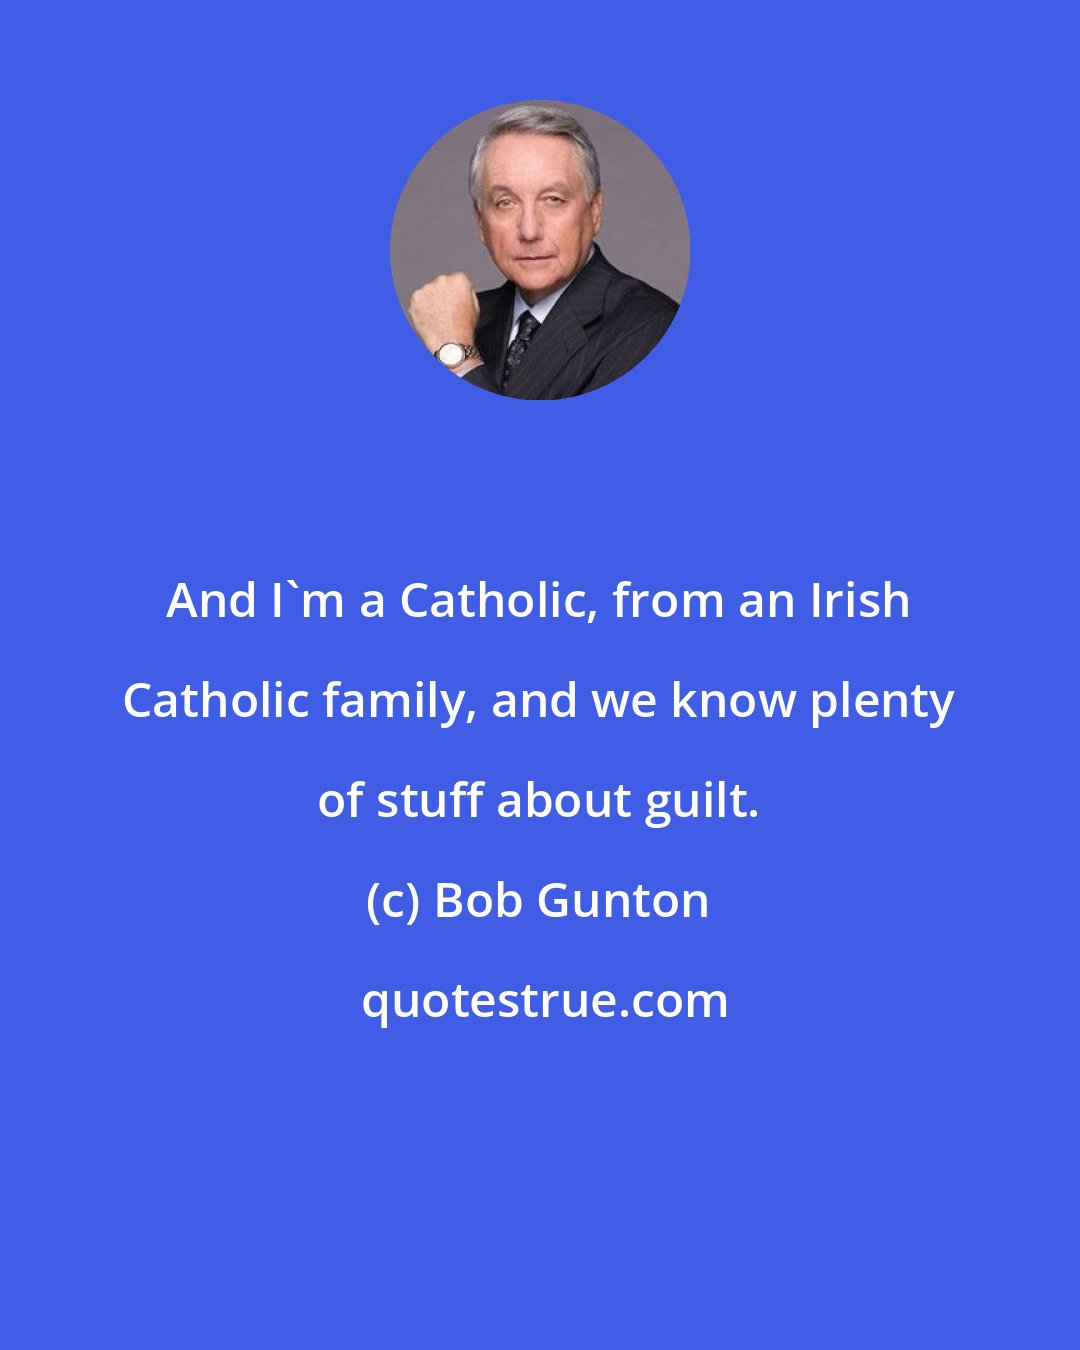 Bob Gunton: And I'm a Catholic, from an Irish Catholic family, and we know plenty of stuff about guilt.